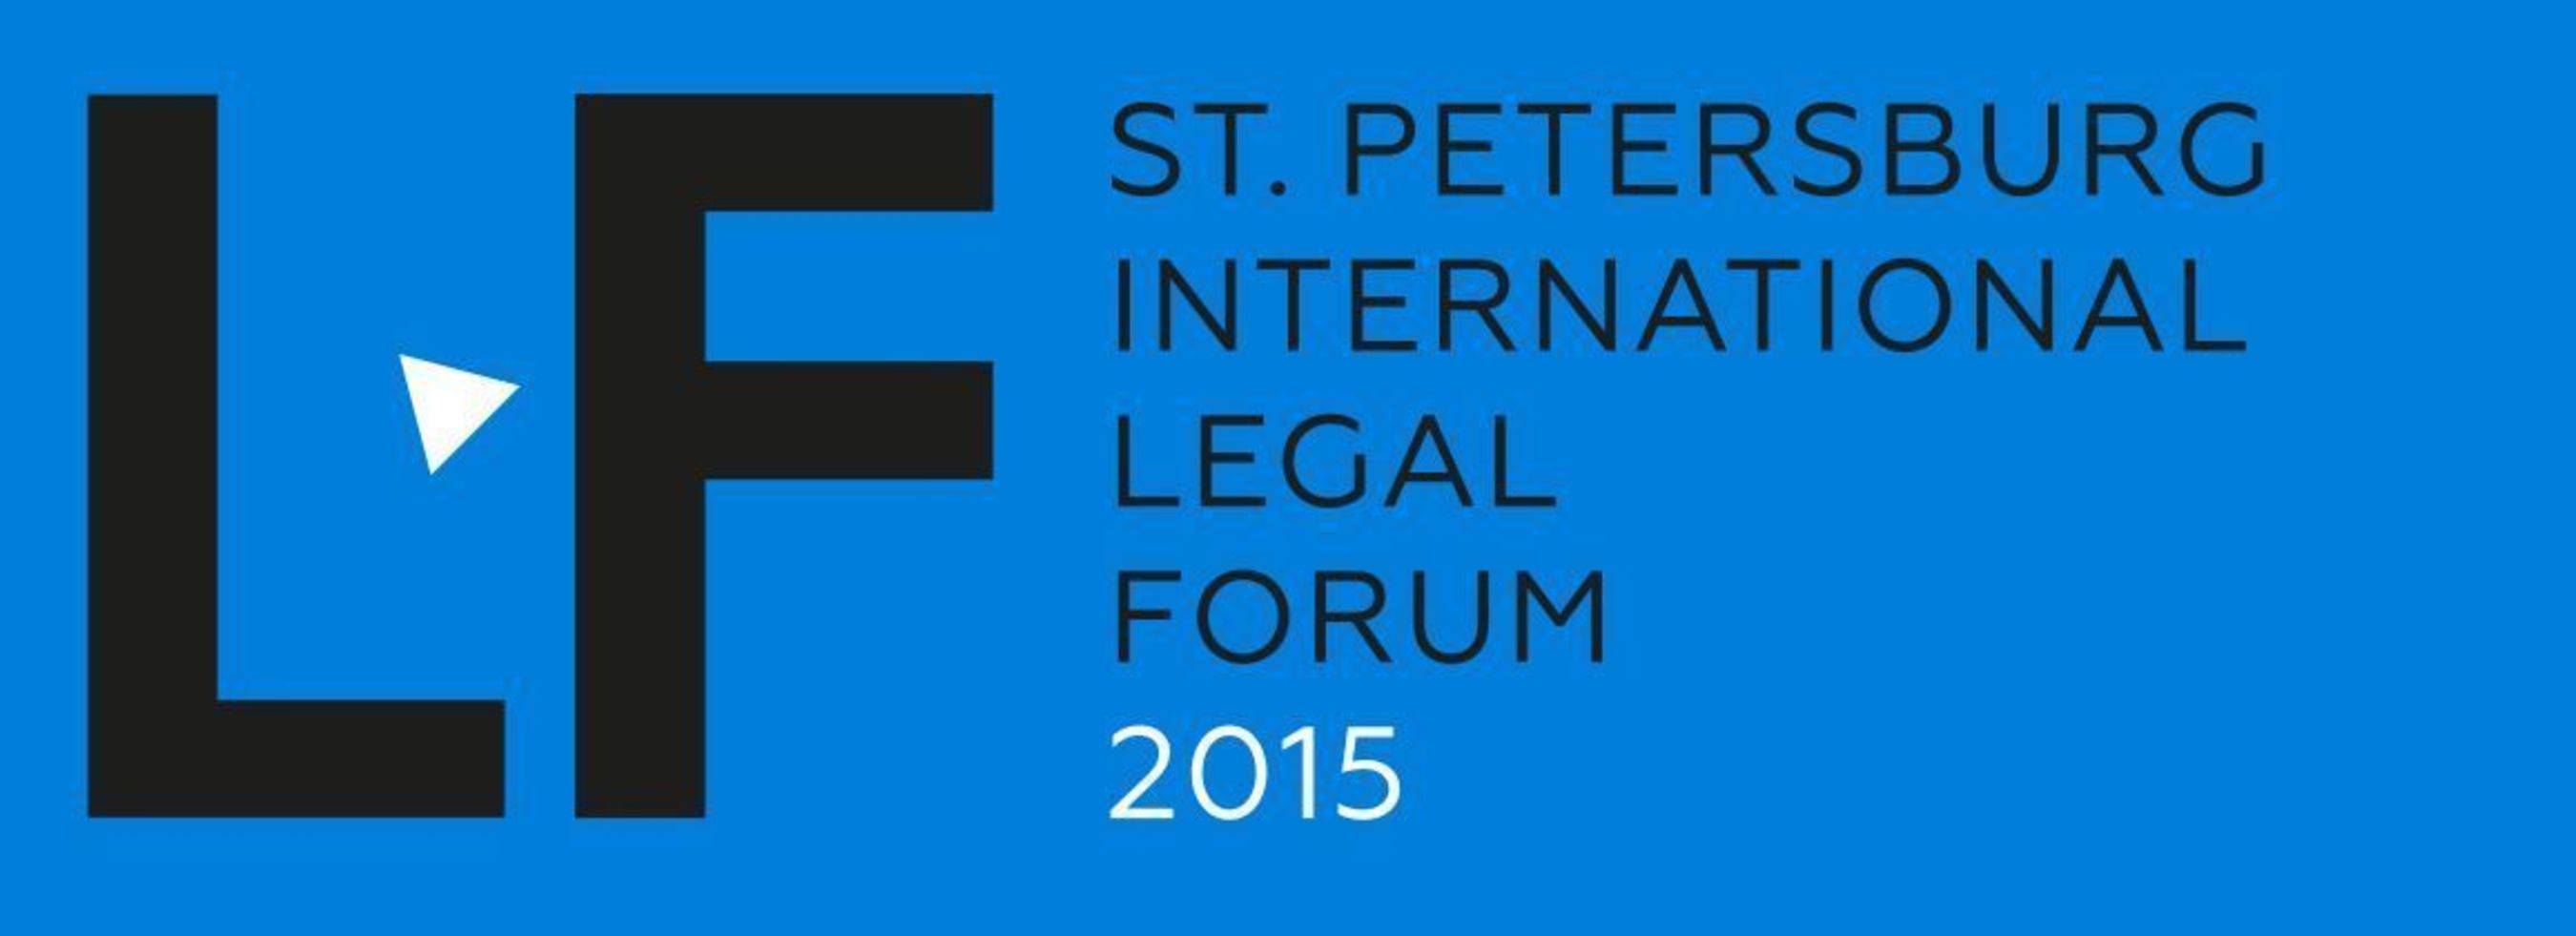 St Petersburg International Legal Forum Logo (PRNewsFoto/International Legal Forum)